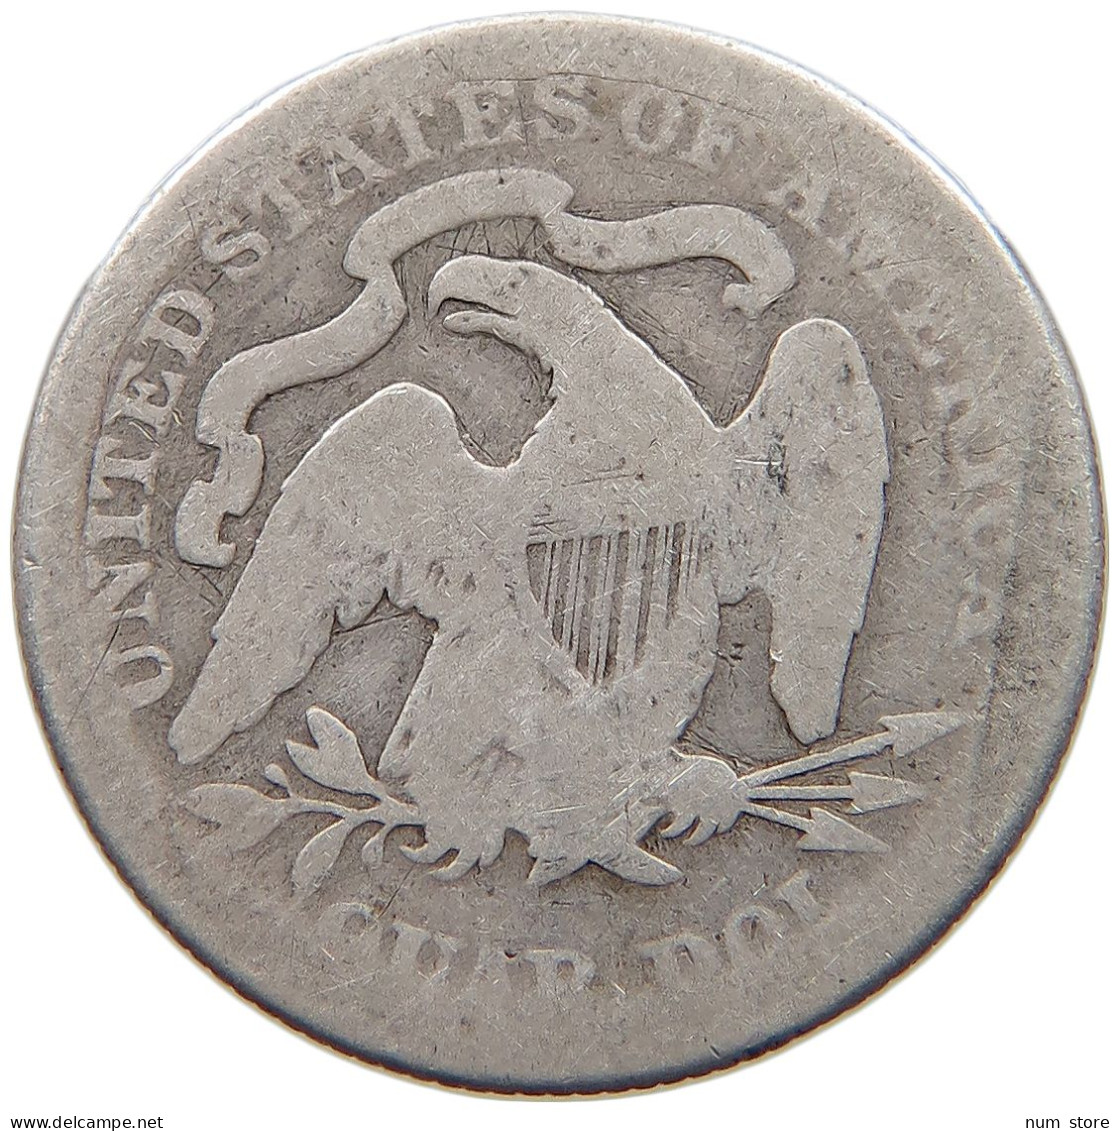 UNITED STATES OF AMERICA QUARTER 1876 SEATED LIBERTY #c036 0265 - 1838-1891: Seated Liberty